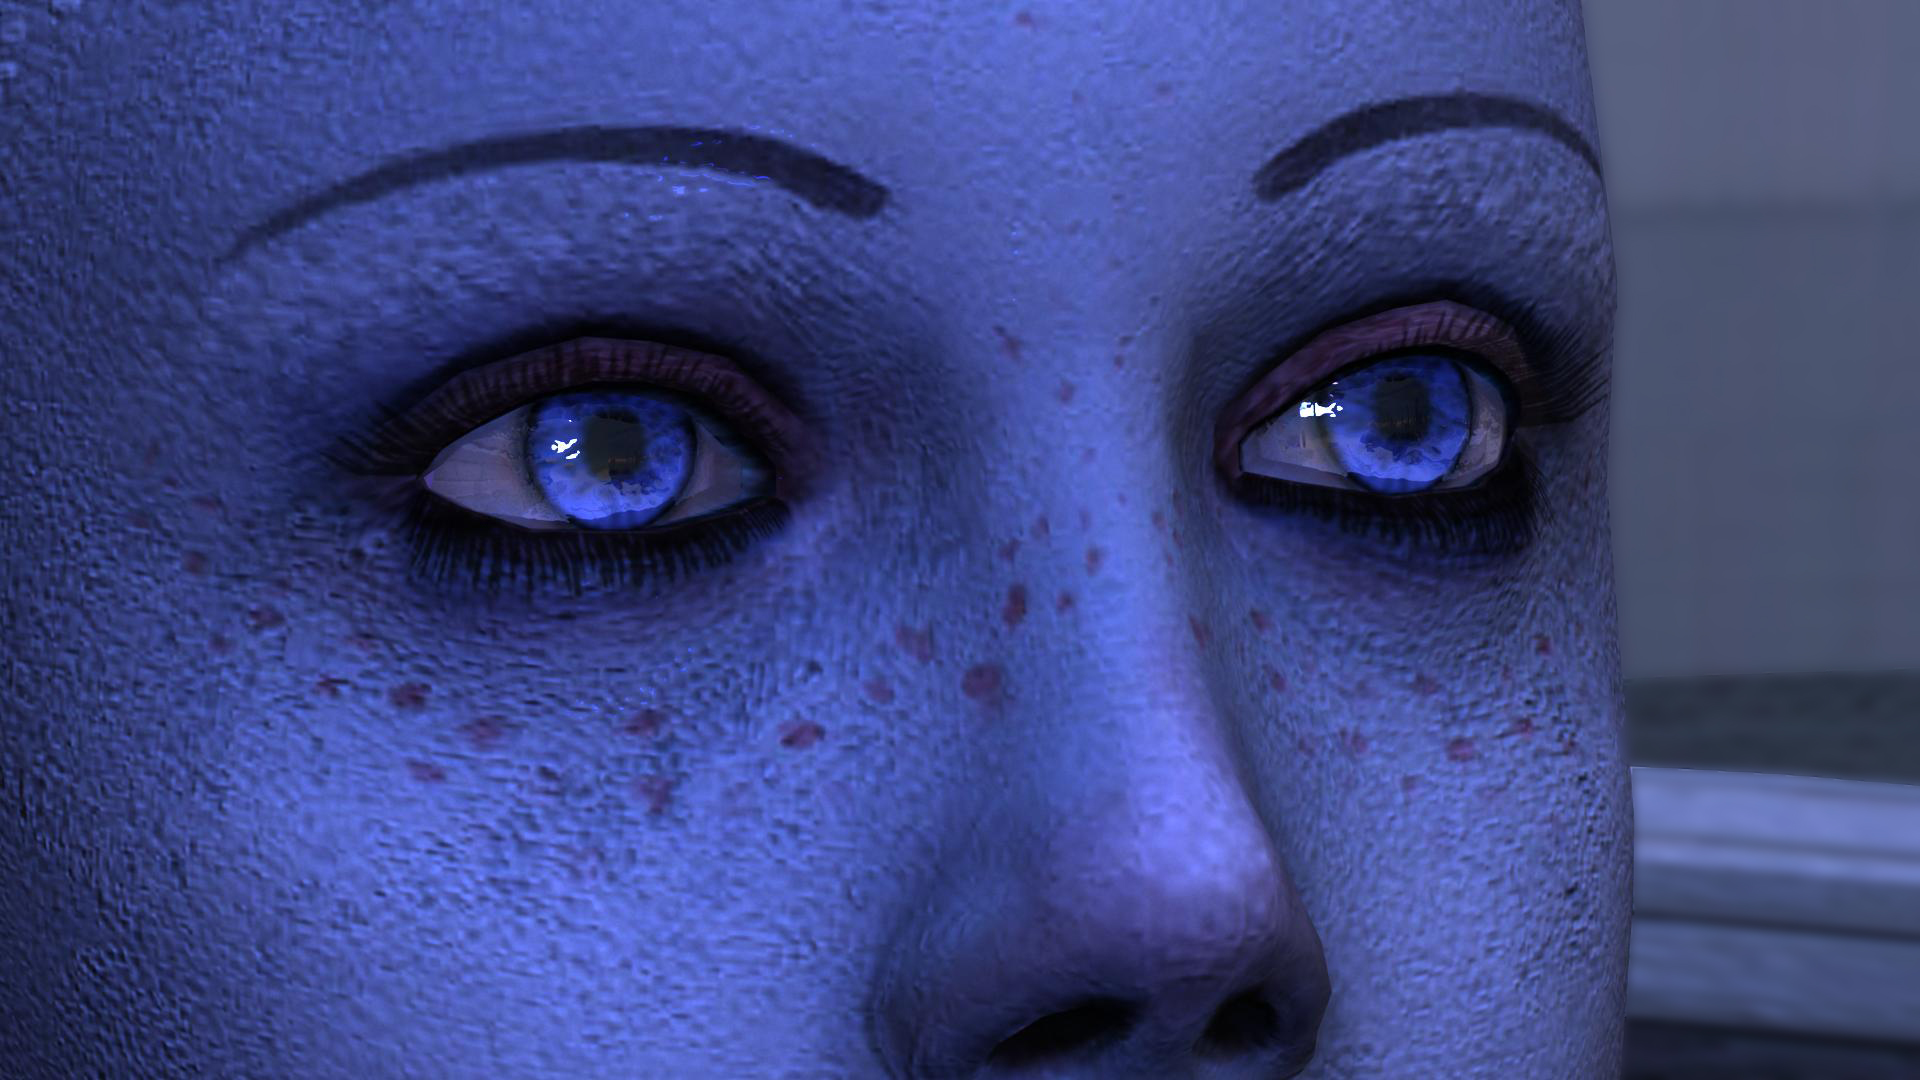 Mass Effect Liaras Eyes By Sanchez752 On Deviantart